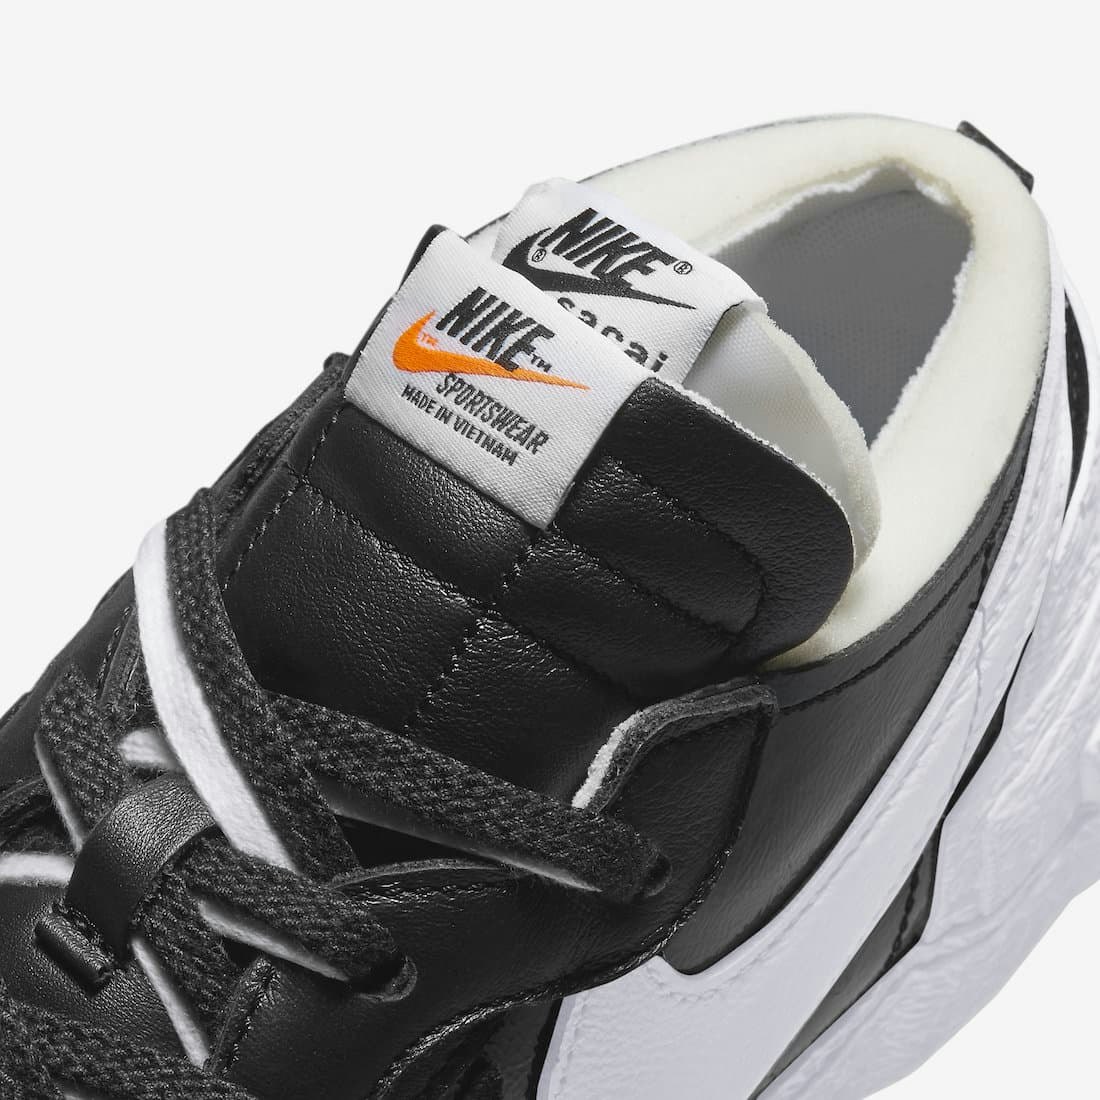 Sacai x Nike Blazer Low "Black Patent"